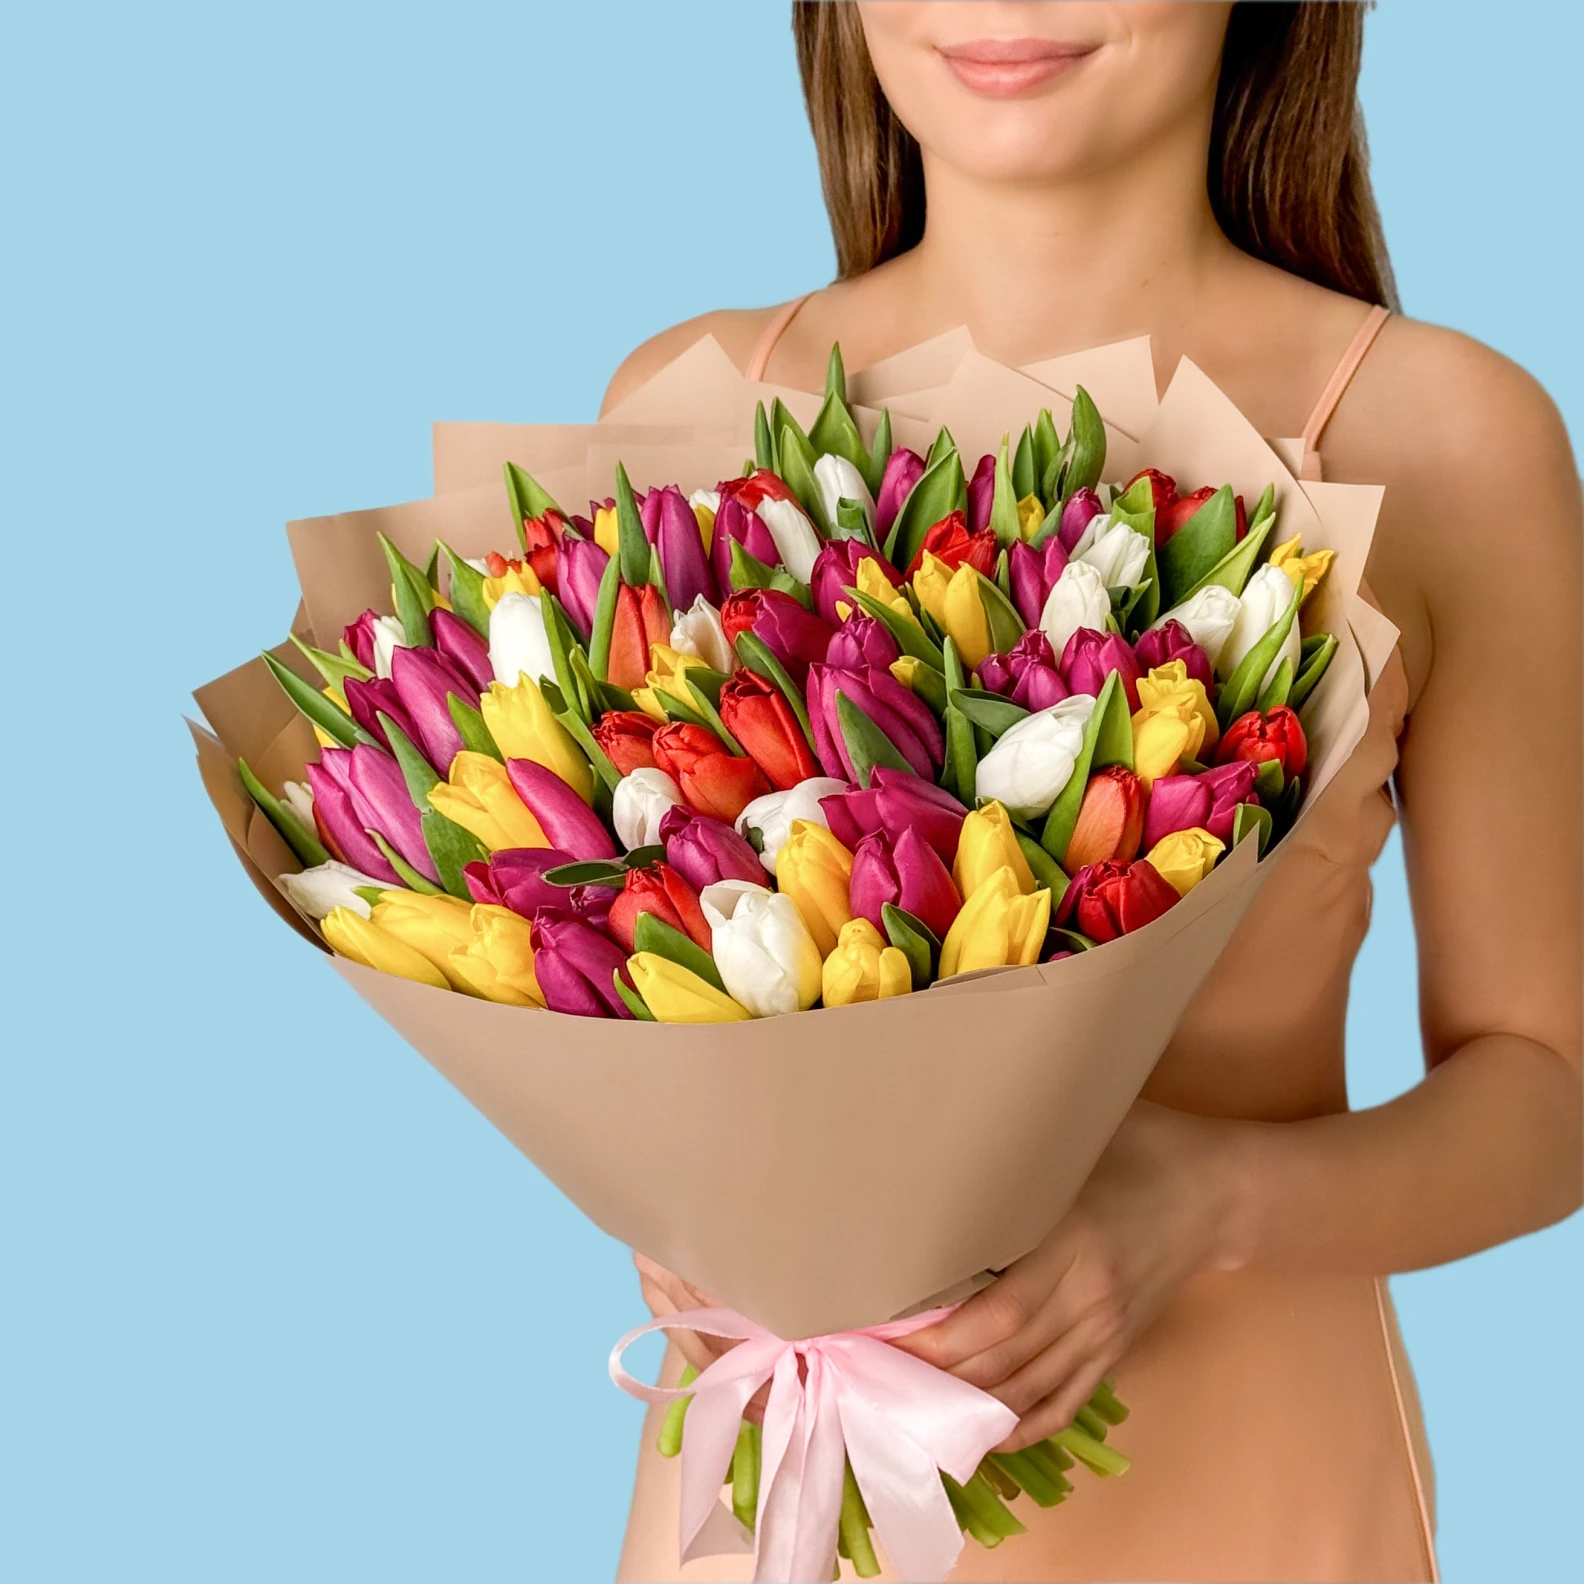 100 Mixed Tulips - image №4